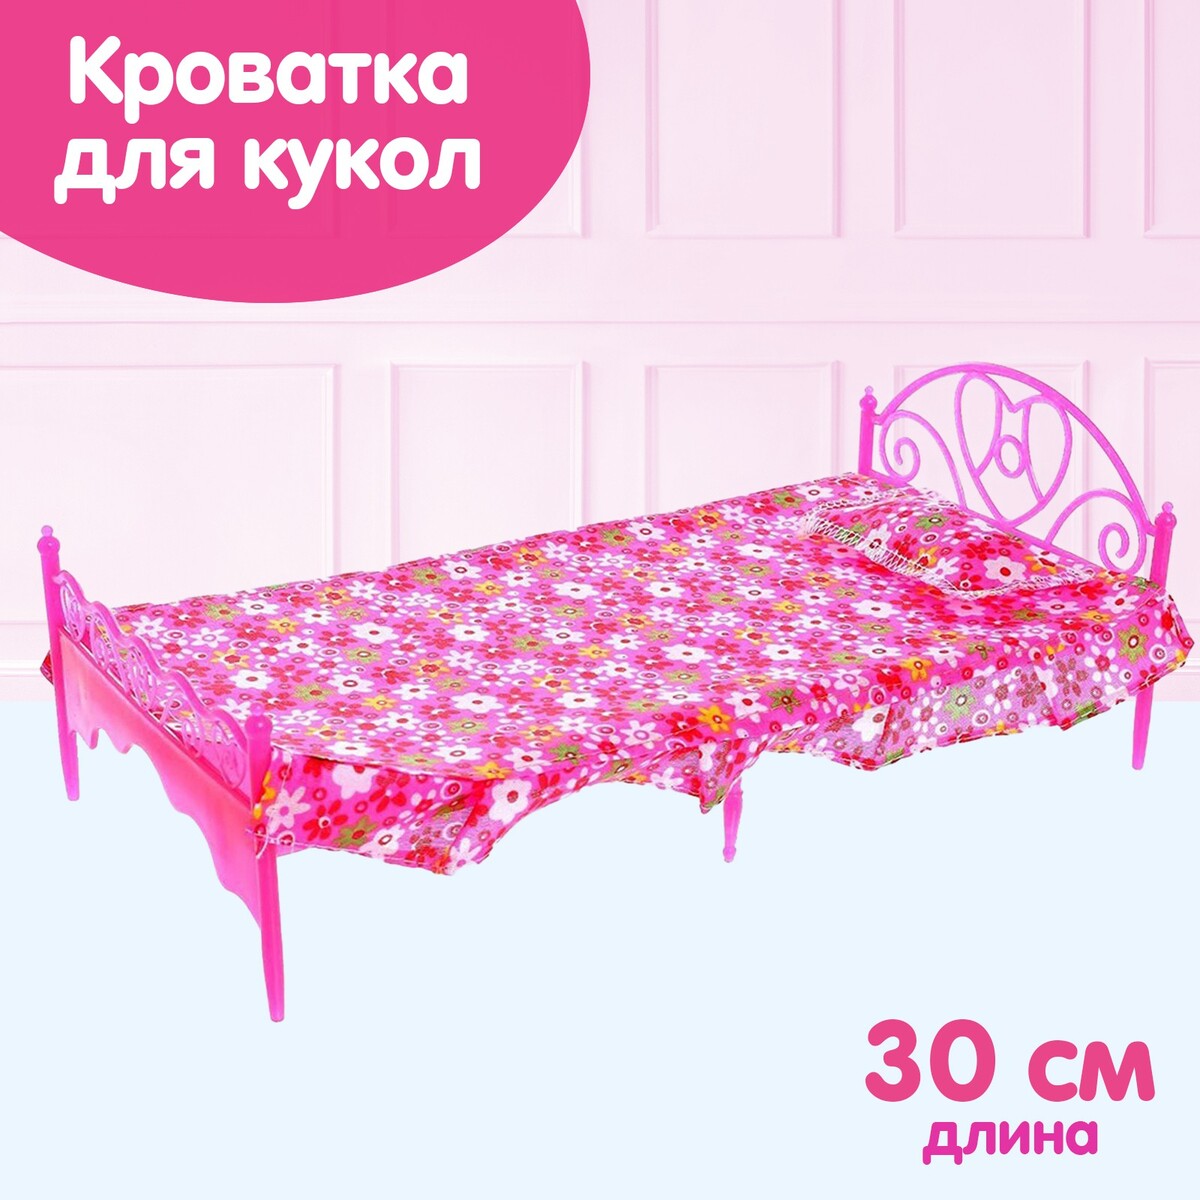 Кроватка для кукол кроватка sellwildwoman msk 01